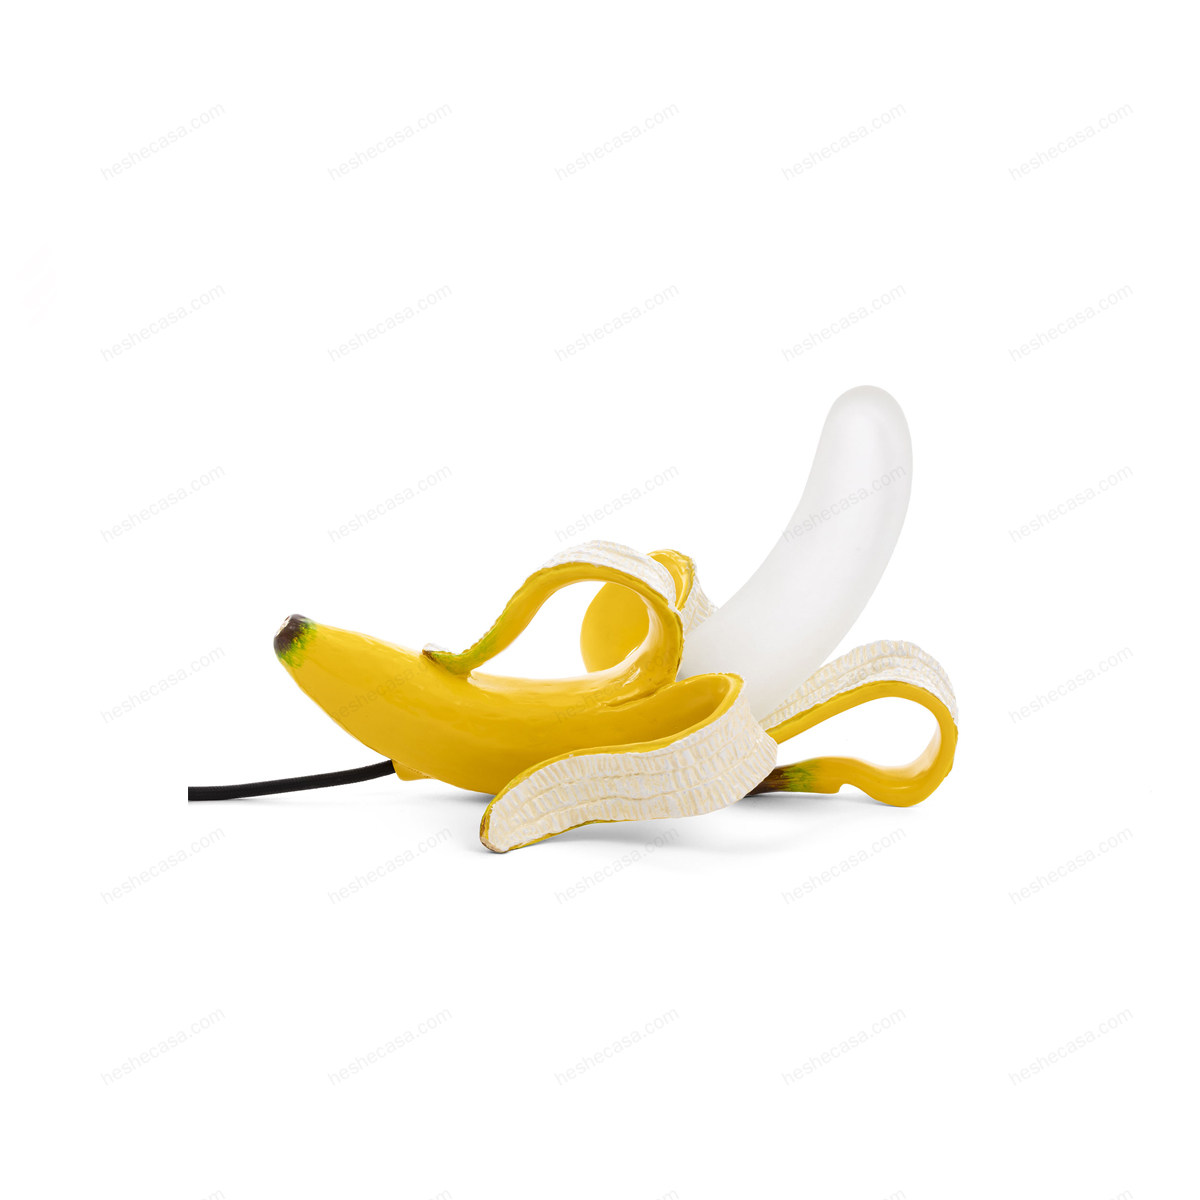 Banana Lamp Yellow Huey台灯